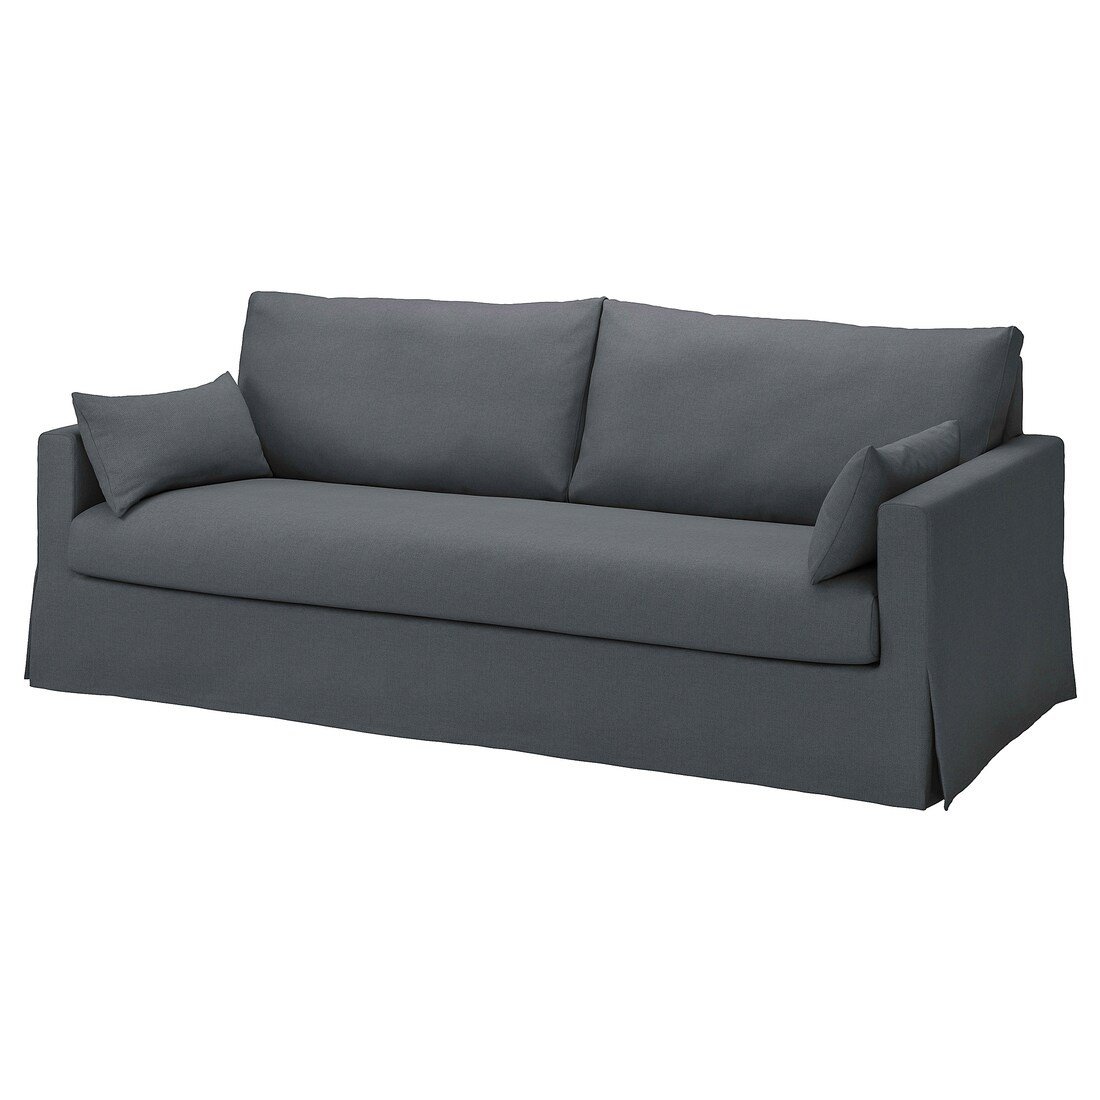 HYLTARP 3-местный диван, Серый грансель